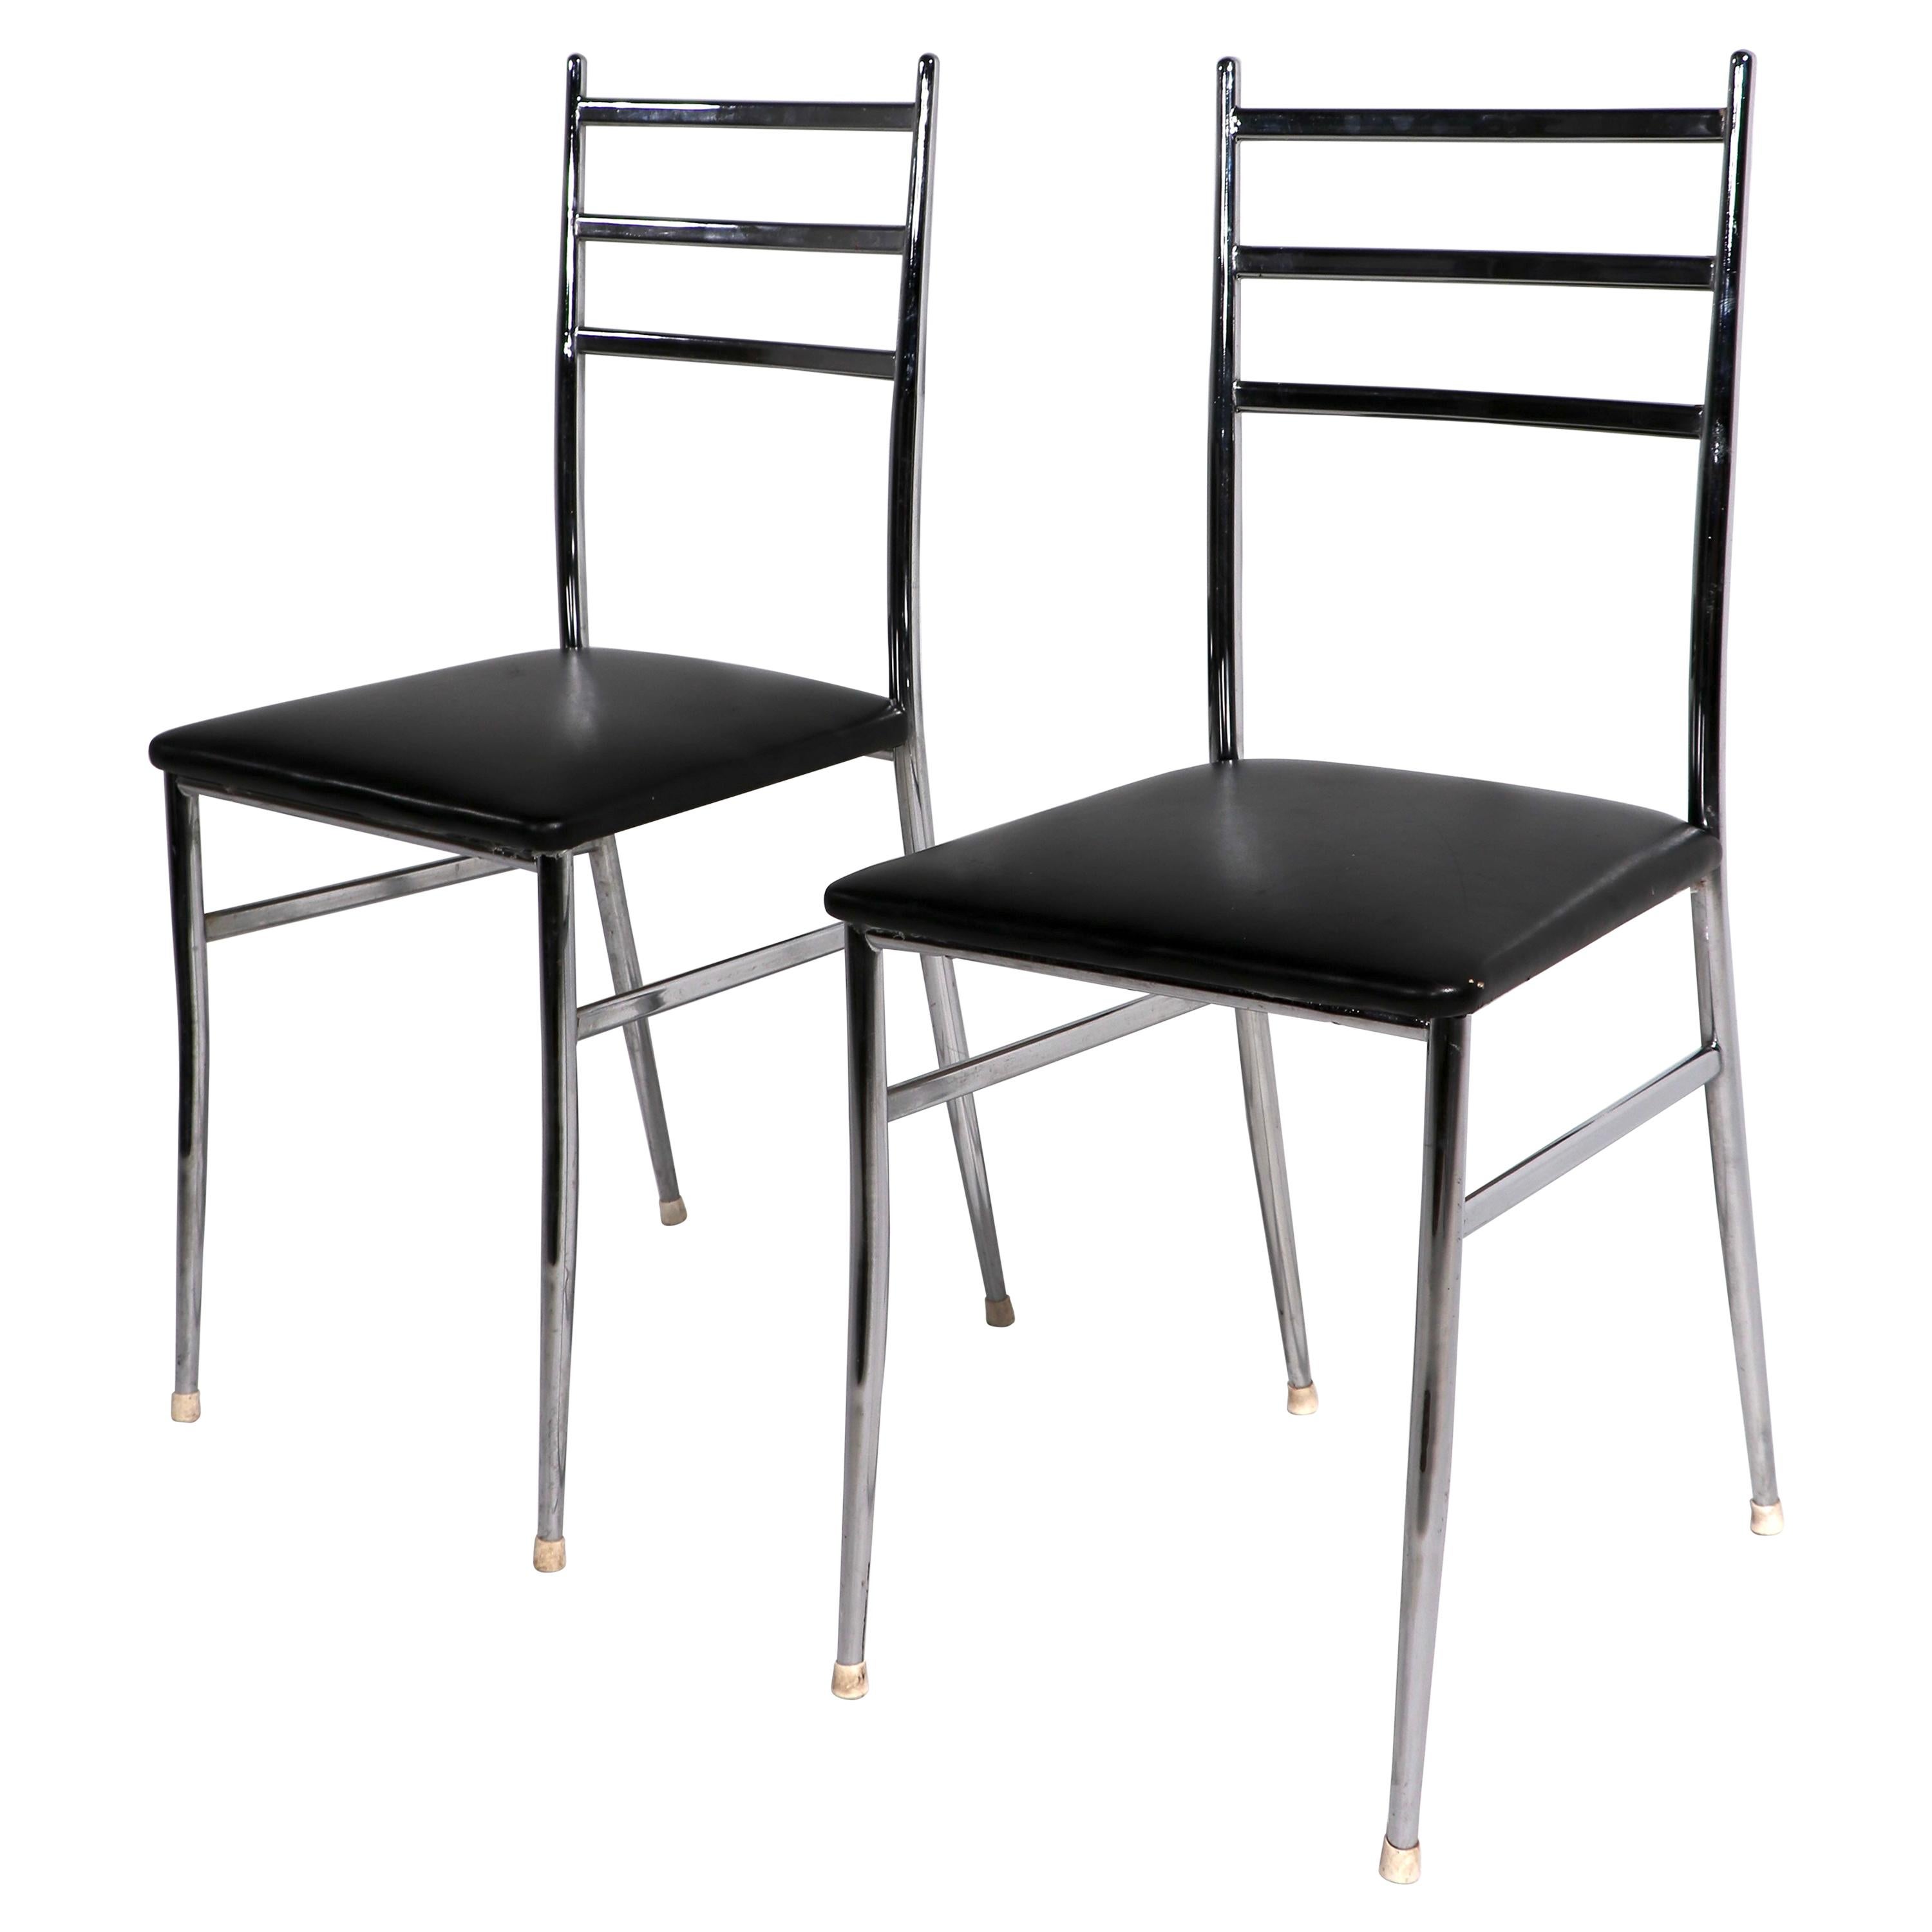 Pr. of Chrome Superleggera Chairs Retailed by W & J Sloane